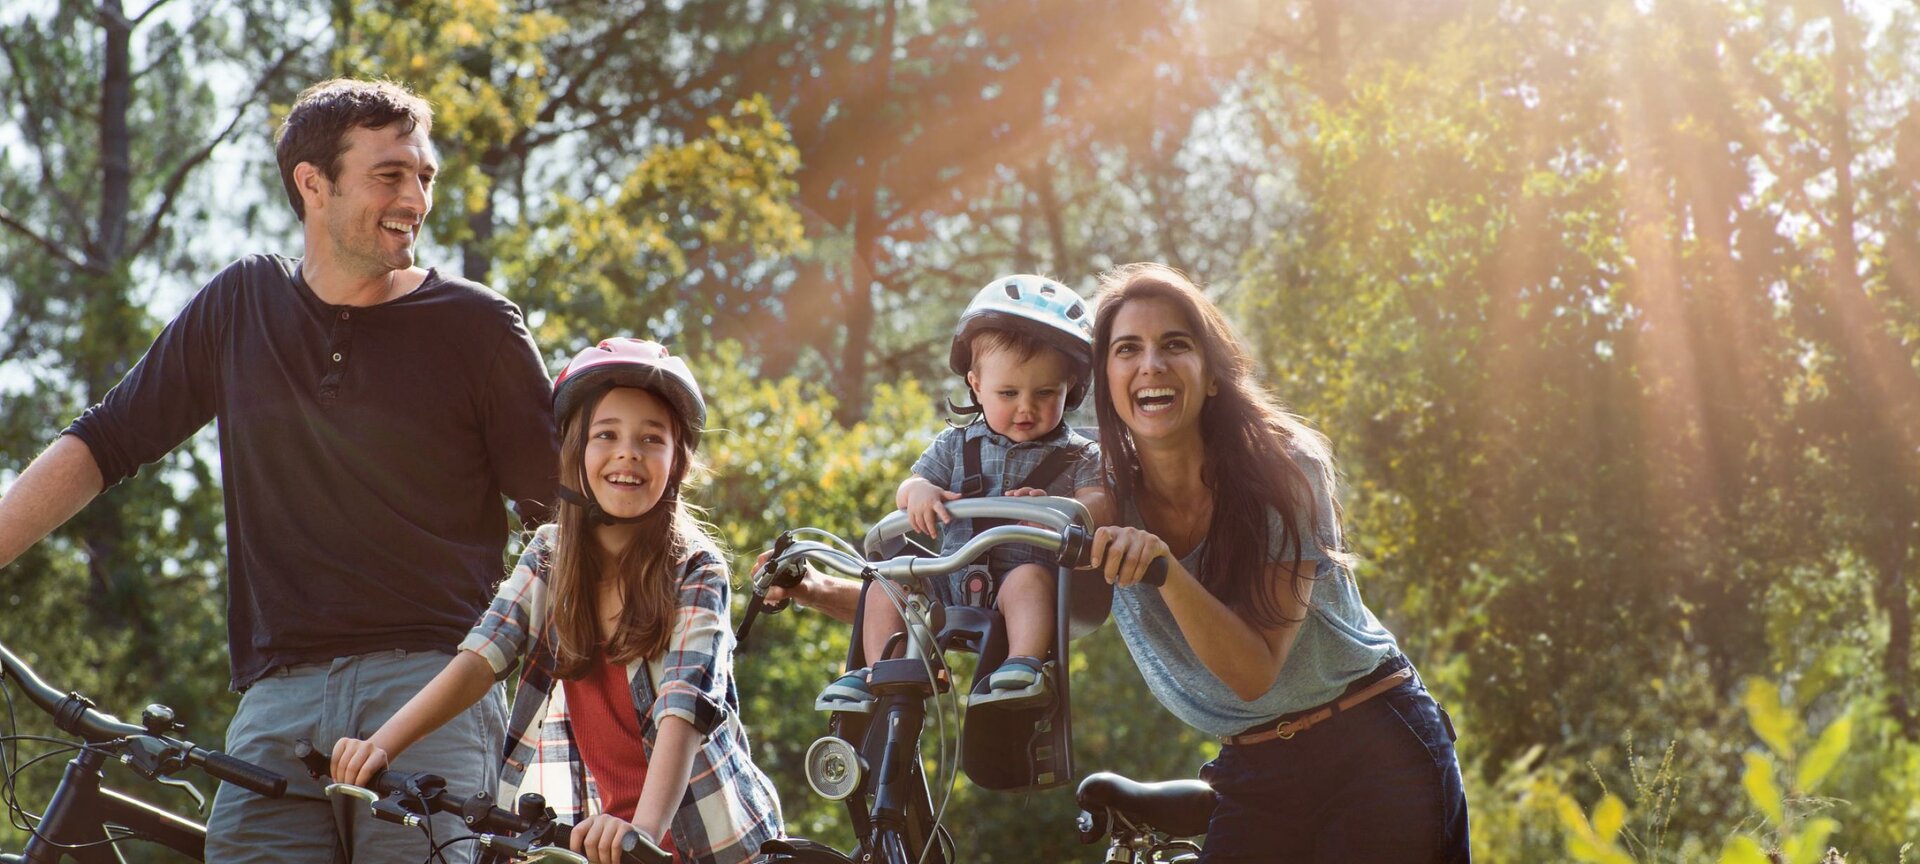 Cycle Center Erperheide - Familie